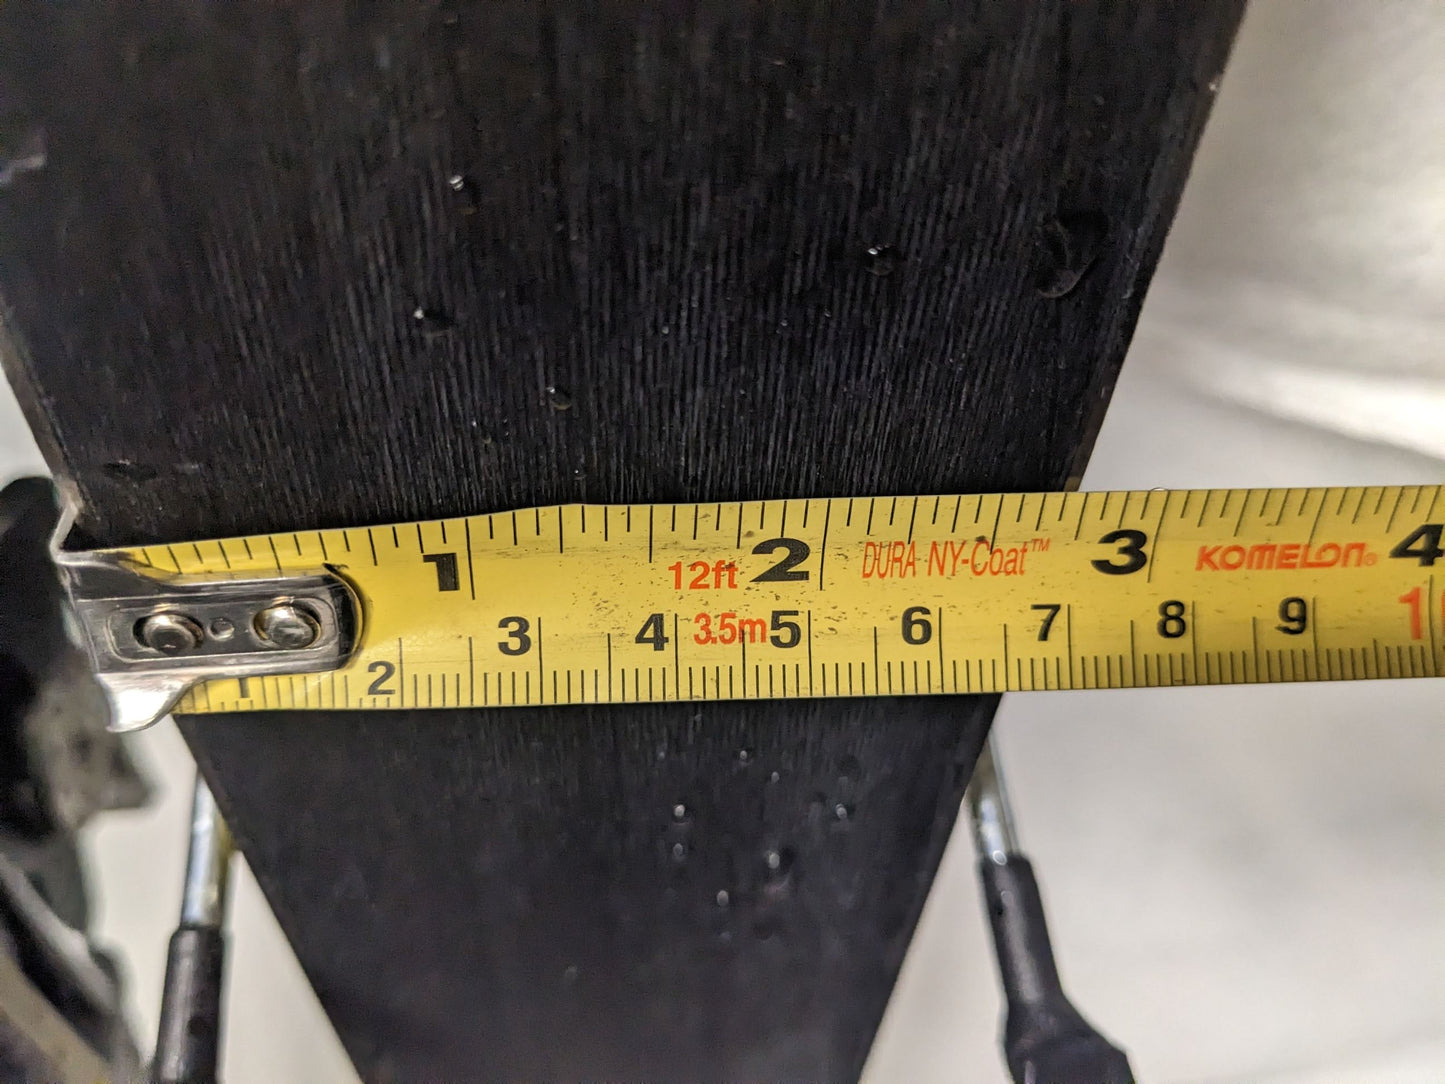 Volkl Vertigo G3 Skis w/Marker Bindings Size 177 Cm Color Yellow Condition Used